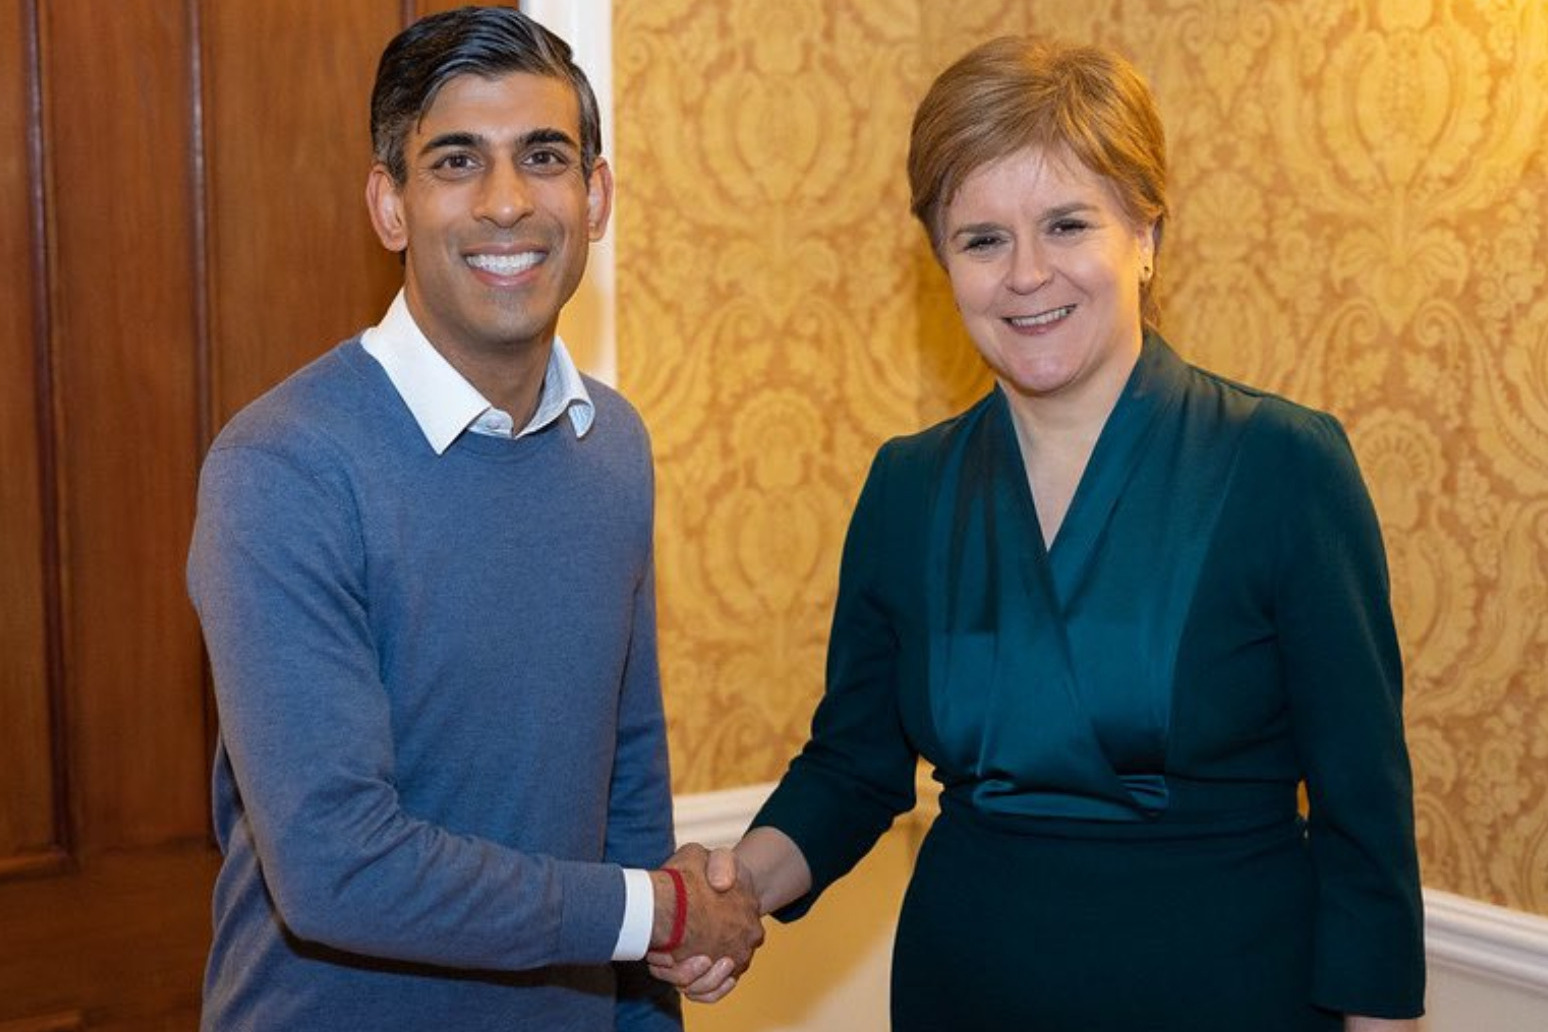 Sunak seeks to ‘strengthen’ relationship with Sturgeon on Scotland trip 